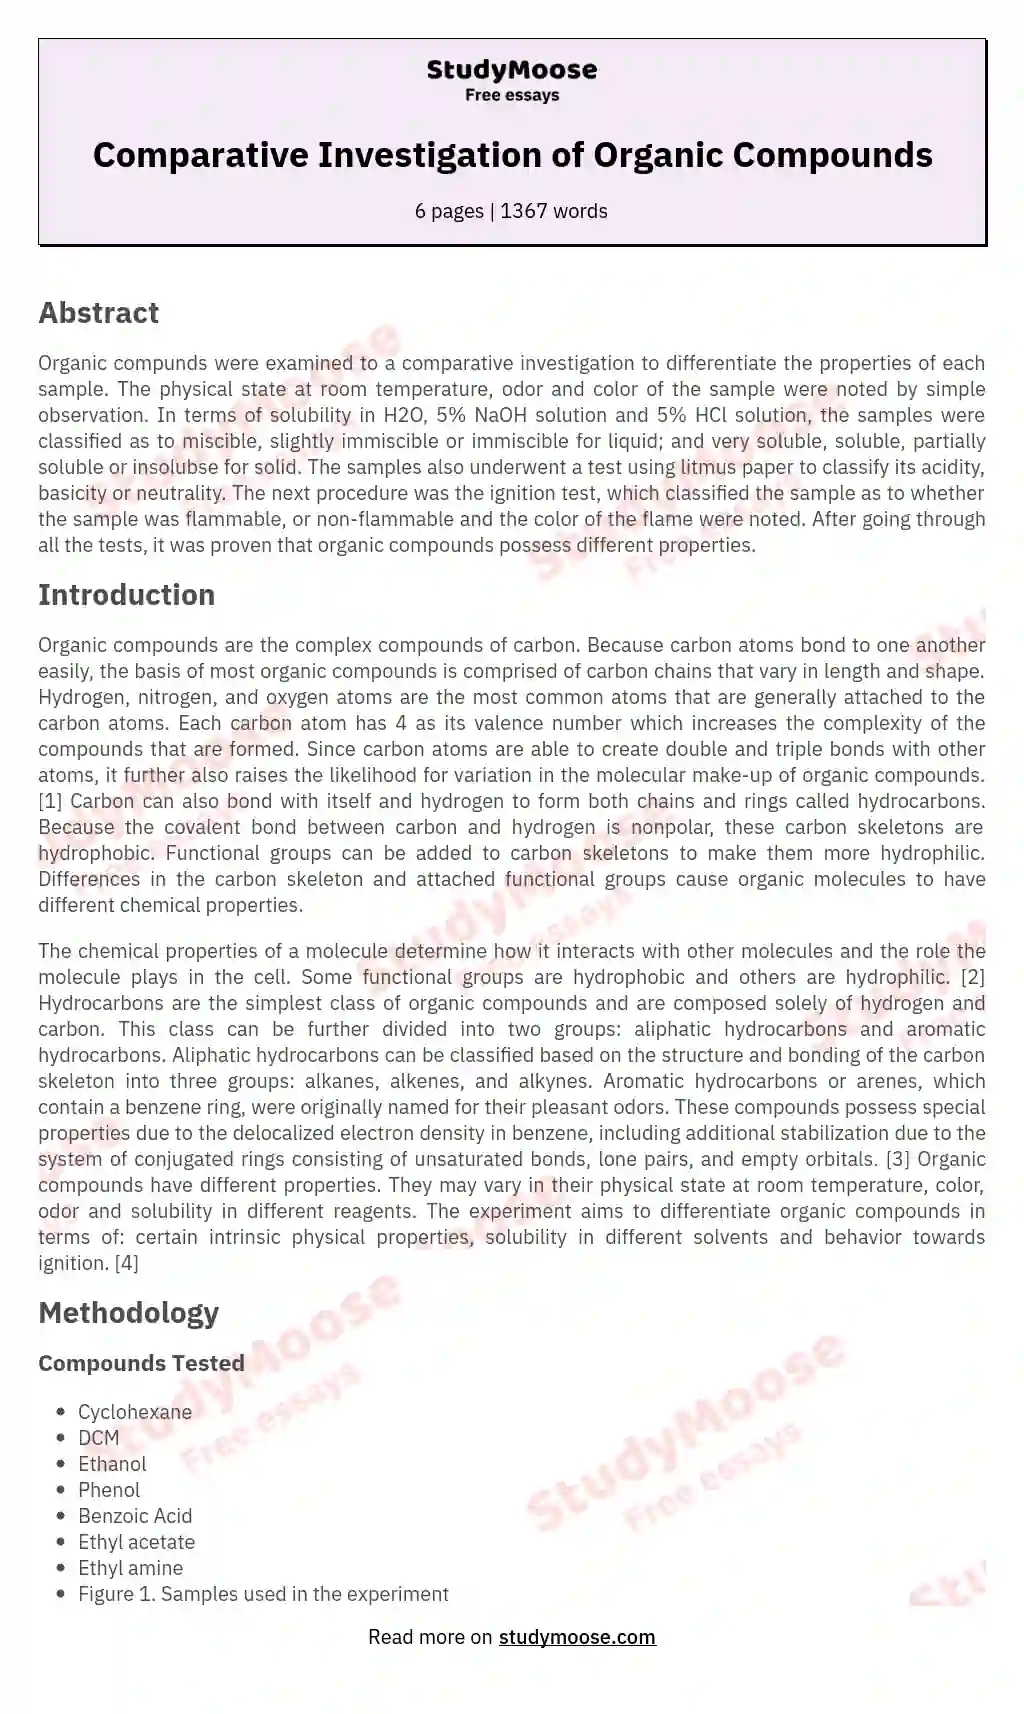 Comparative Investigation of Organic Compounds essay